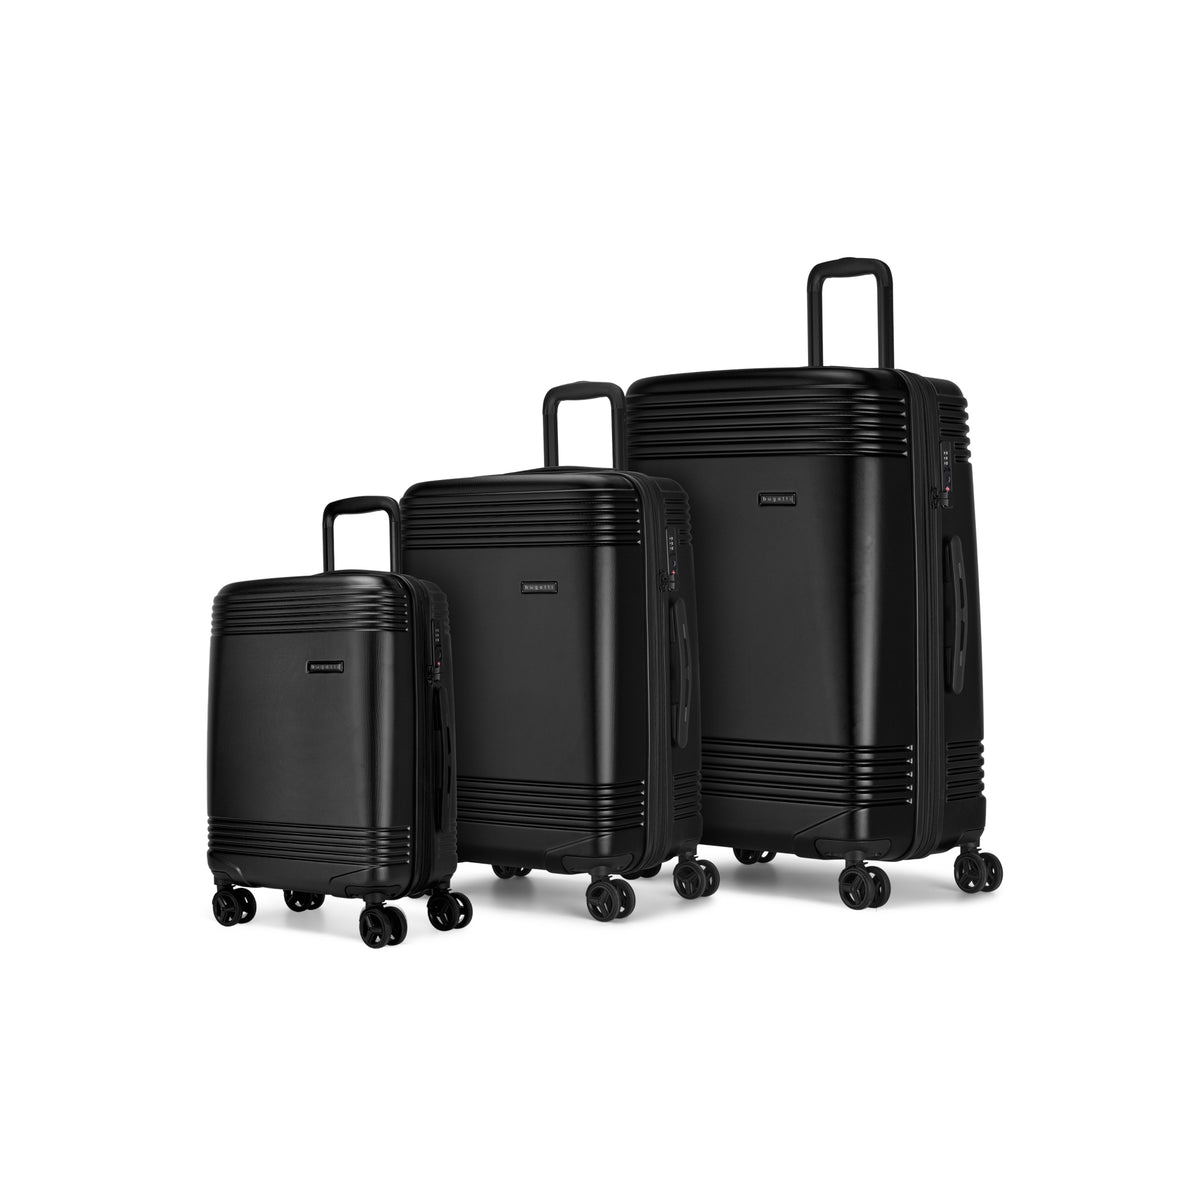 Seletti lips-print suitcase - Black